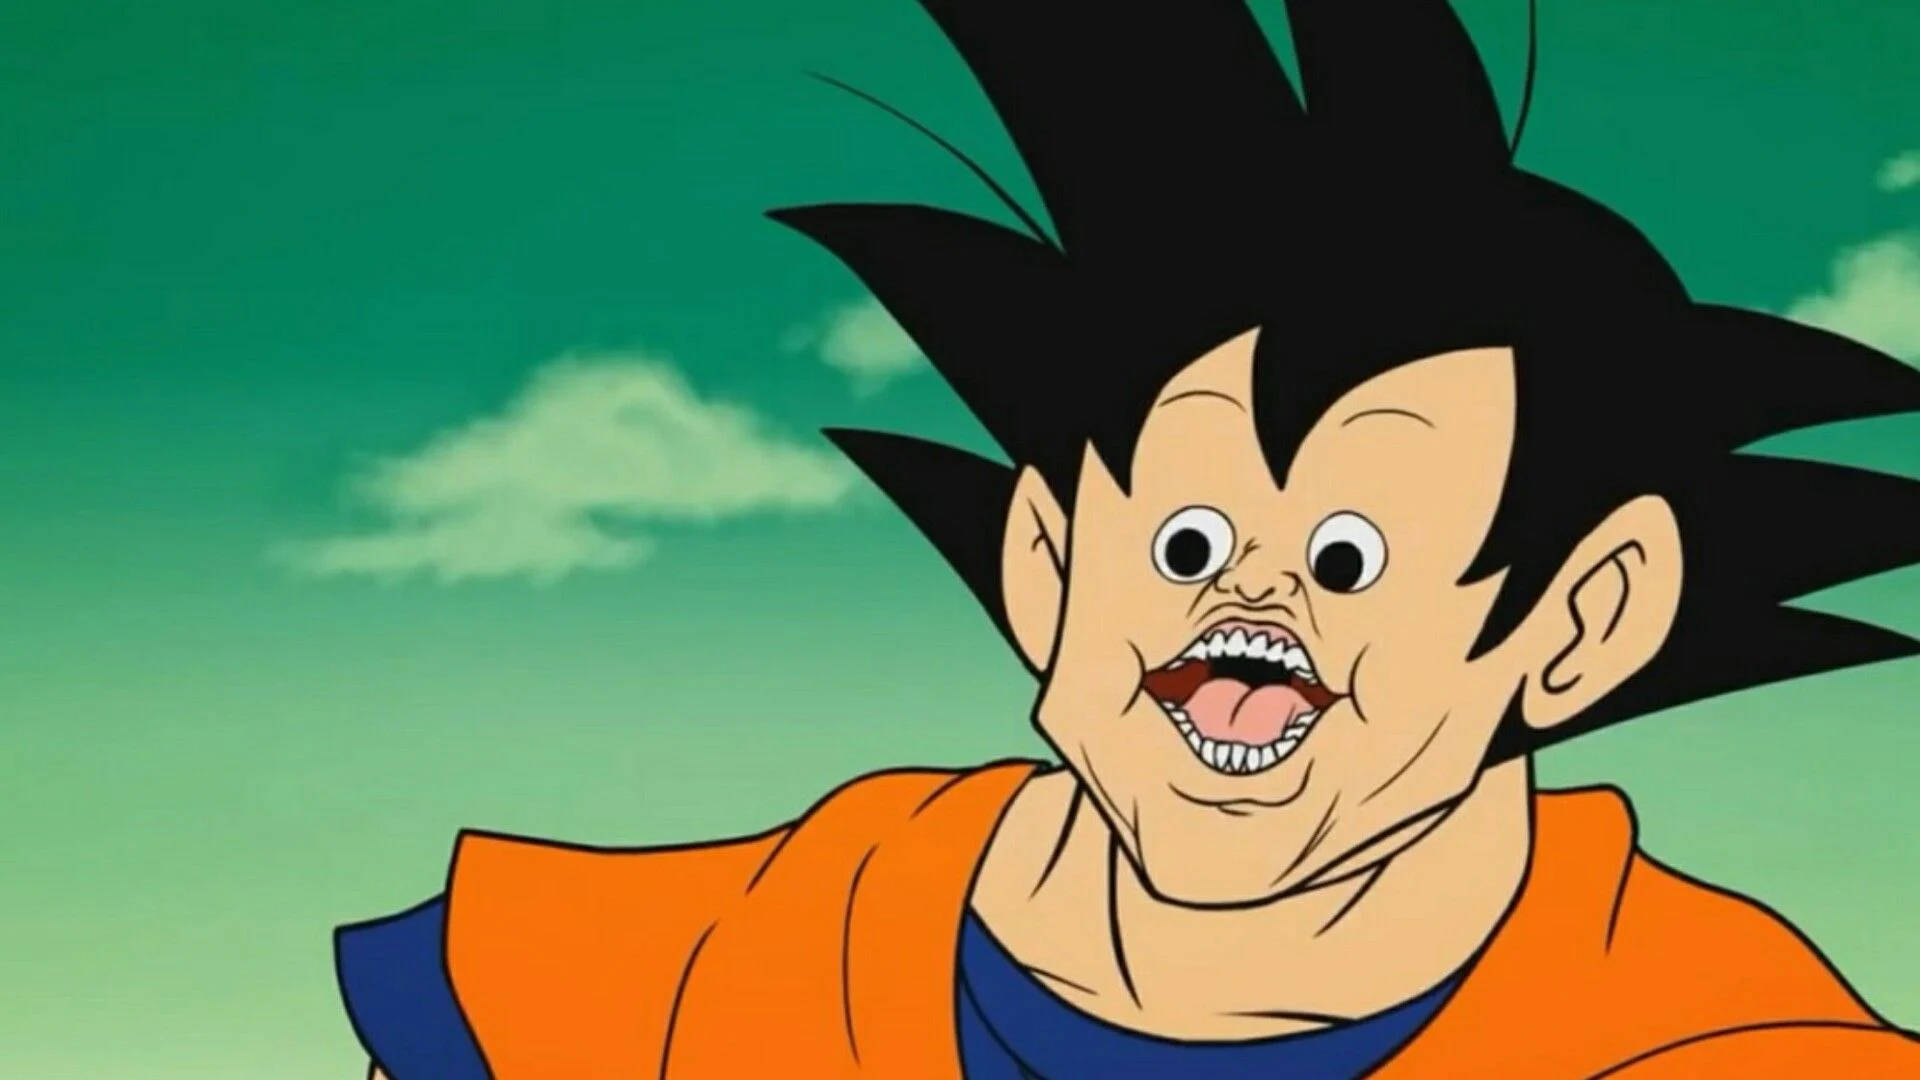 Funny Anime Goku Meme Face Wallpaper